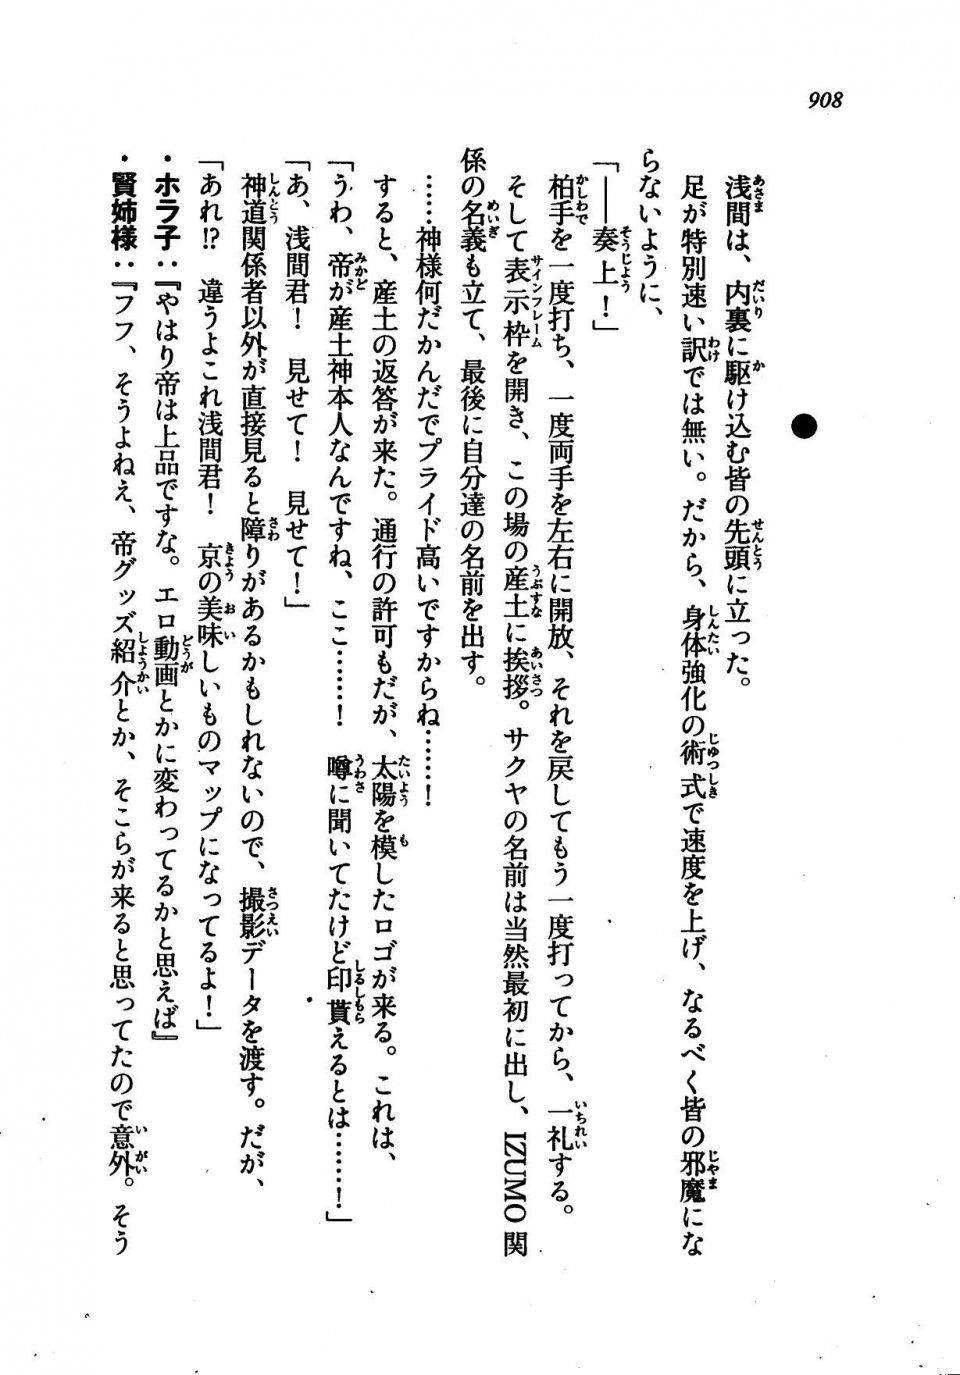 Kyoukai Senjou no Horizon LN Vol 21(8C) Part 2 - Photo #392